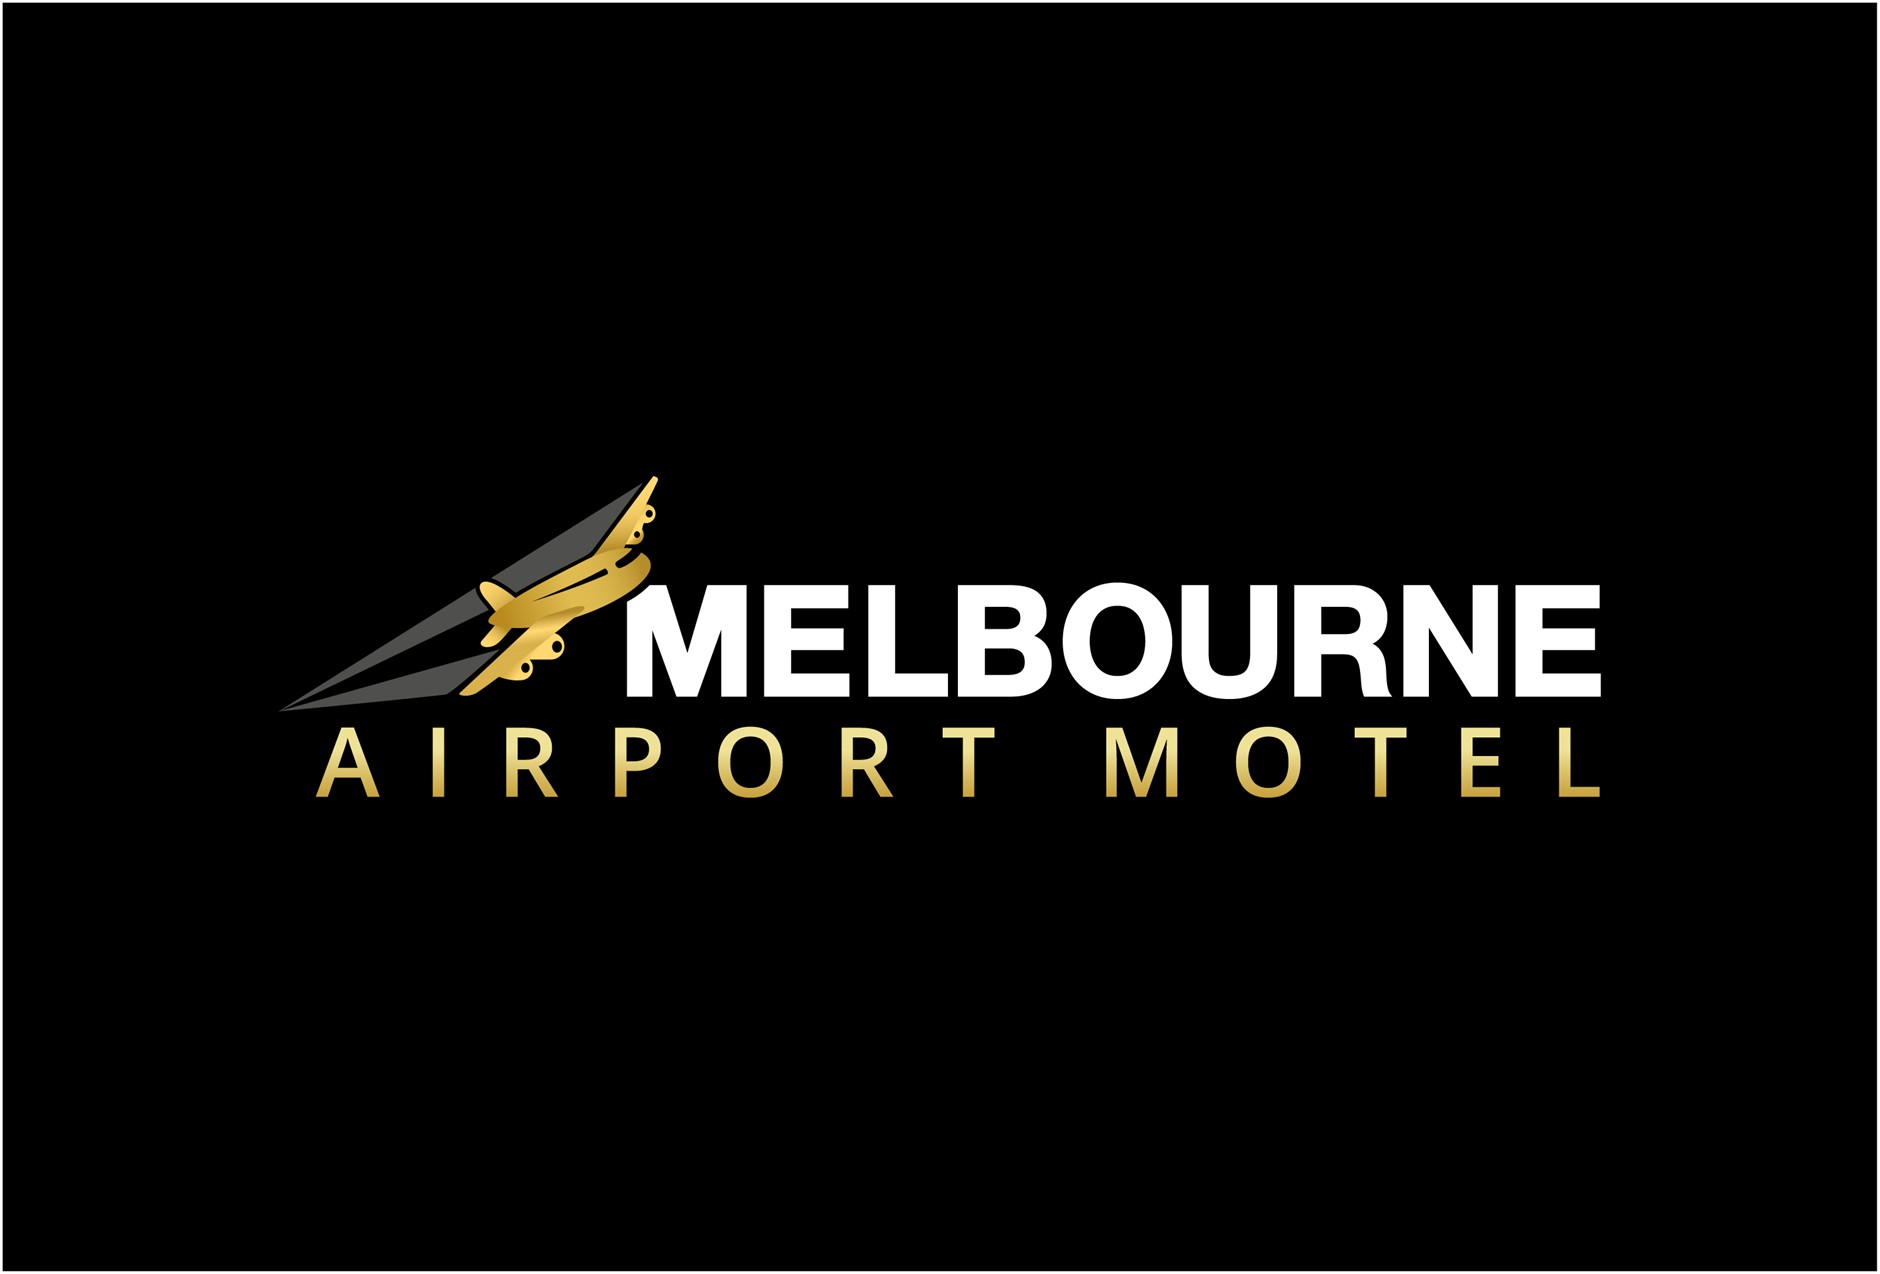 Melbourne Airport Motel